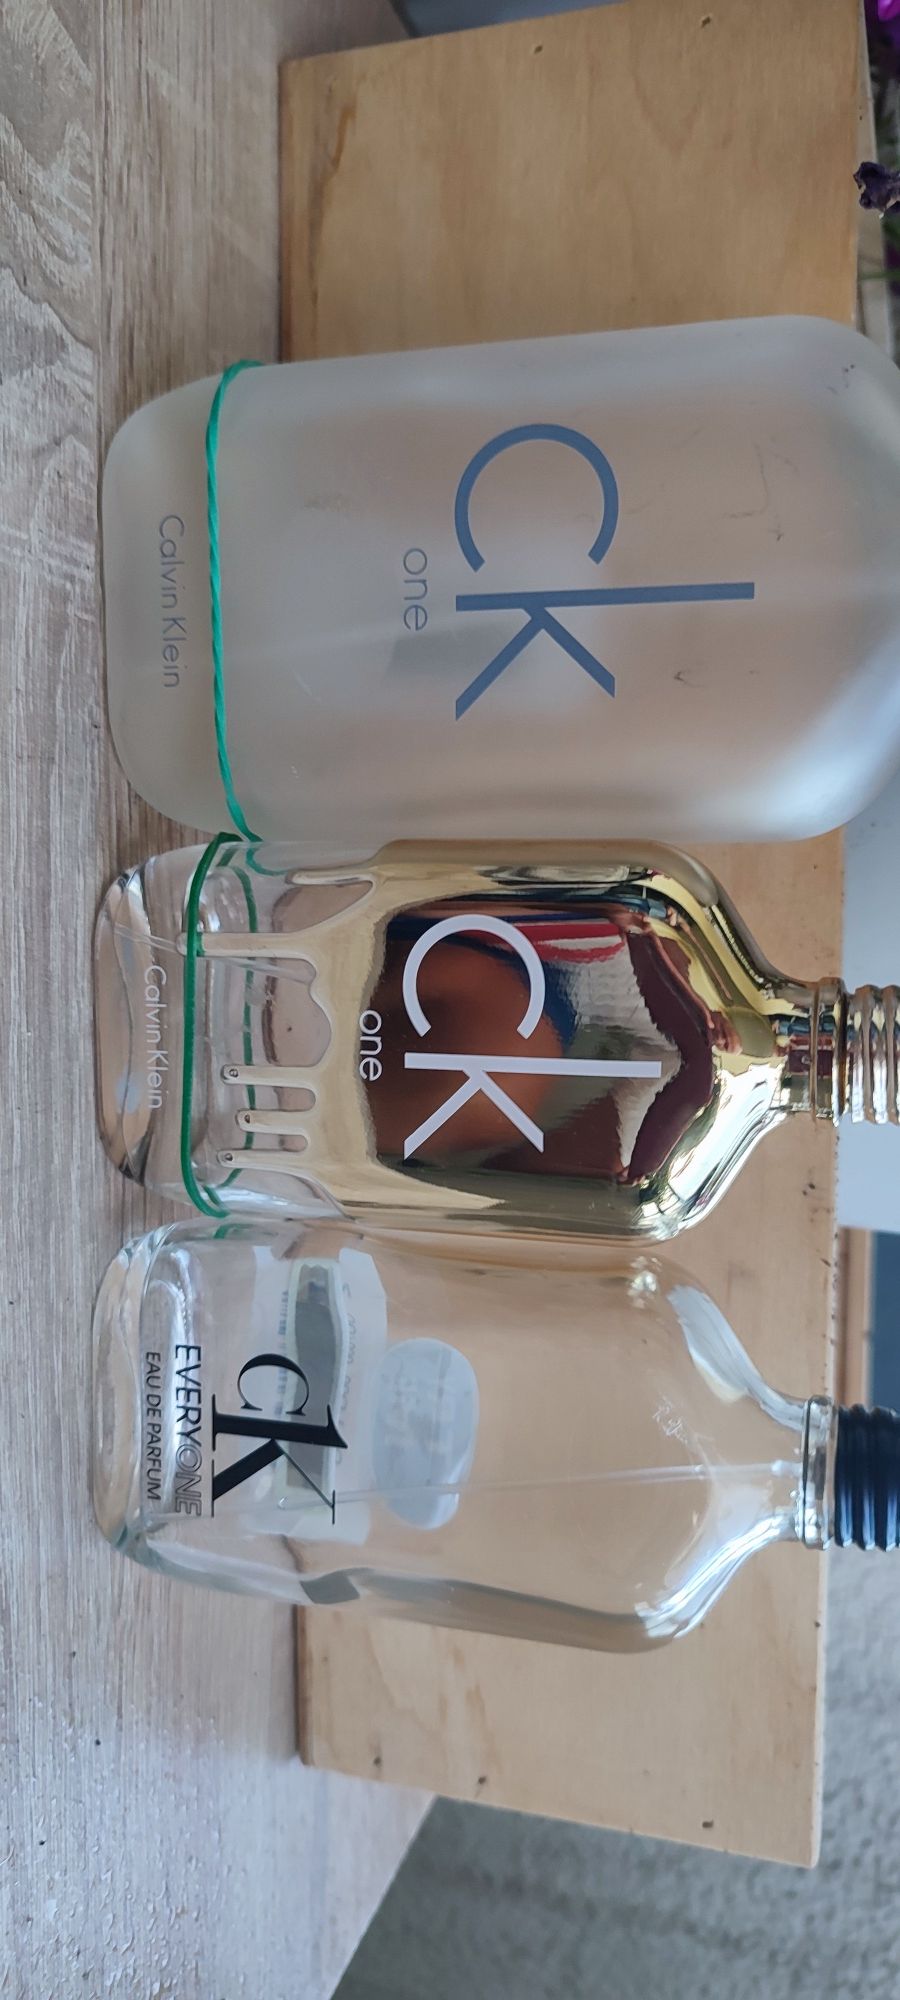 Calvin Klein x 4 końcowki perfum